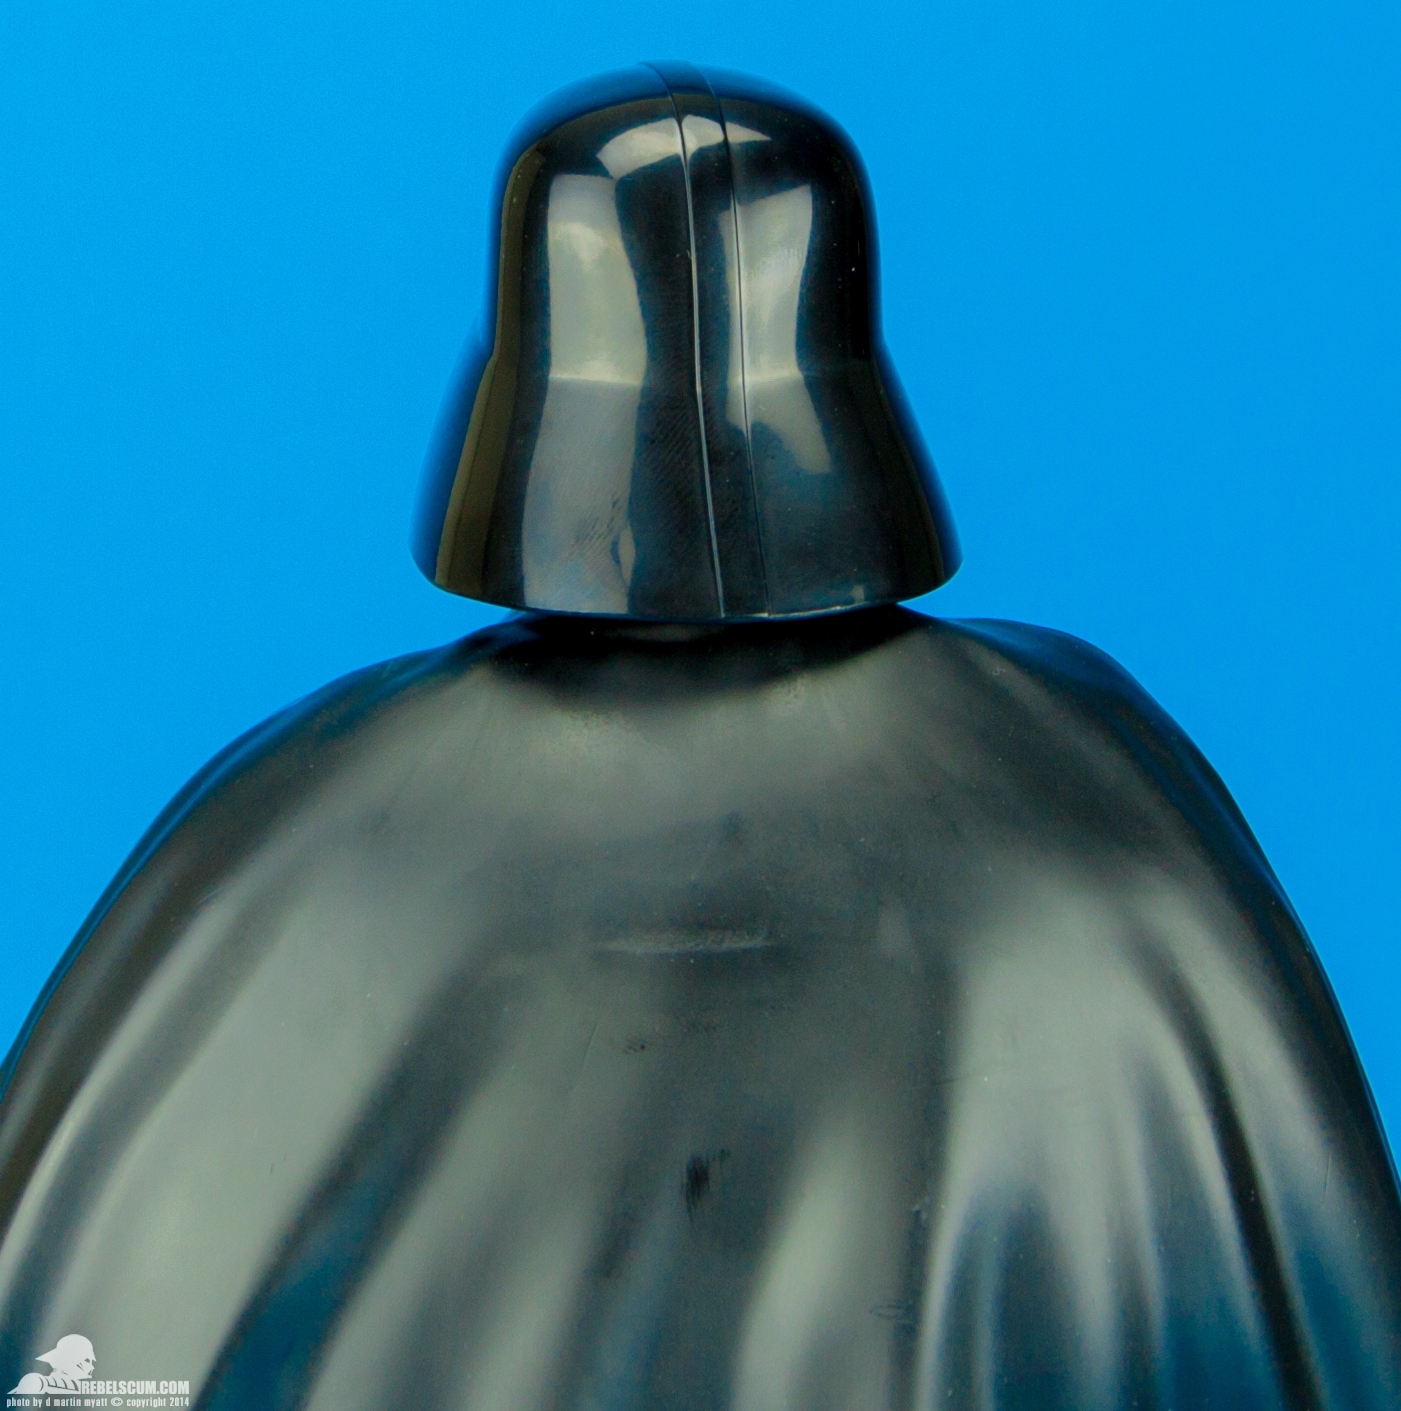 Darth-Vader-Talking-Disney-Store-Exclusive-Star-Wars-008.jpg